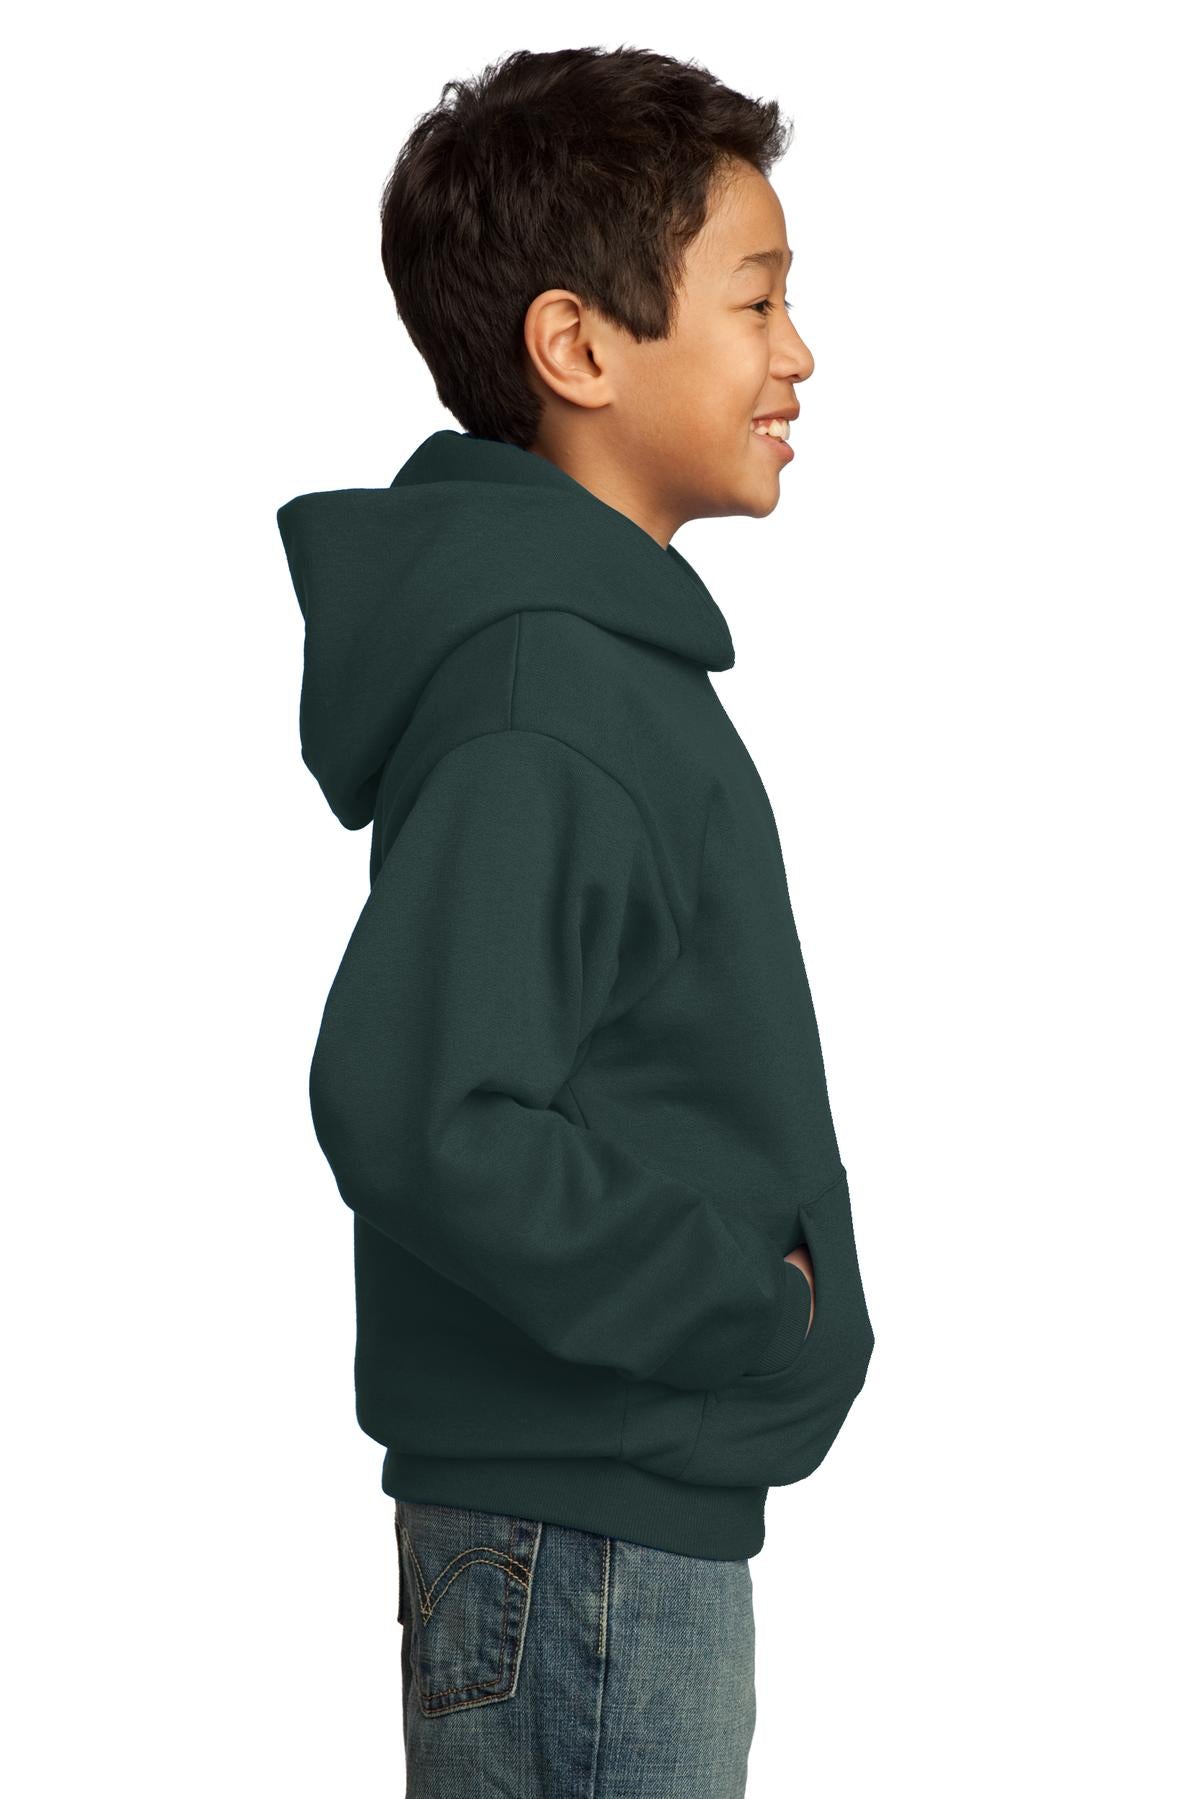 Port & Company - Youth Core Fleece Pullover Hooded Sweatshirt. PC90YH - Dark Green